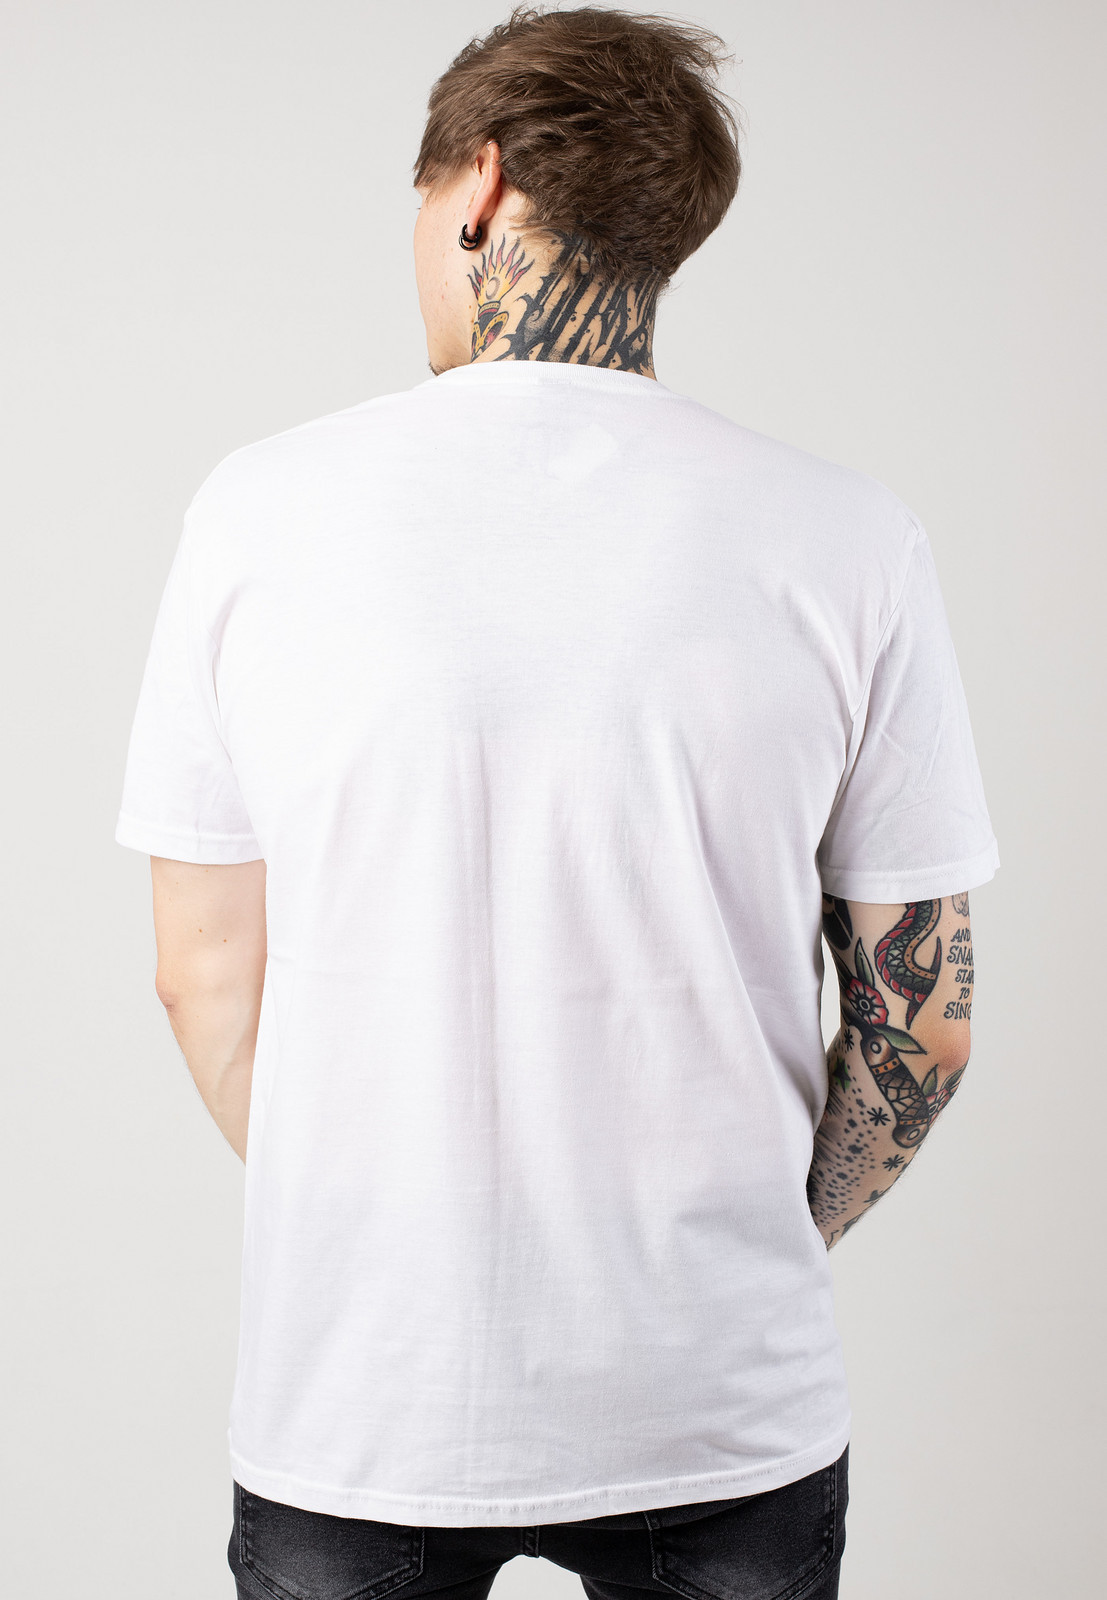 Architects - Death Metal Logo White - T-Shirt